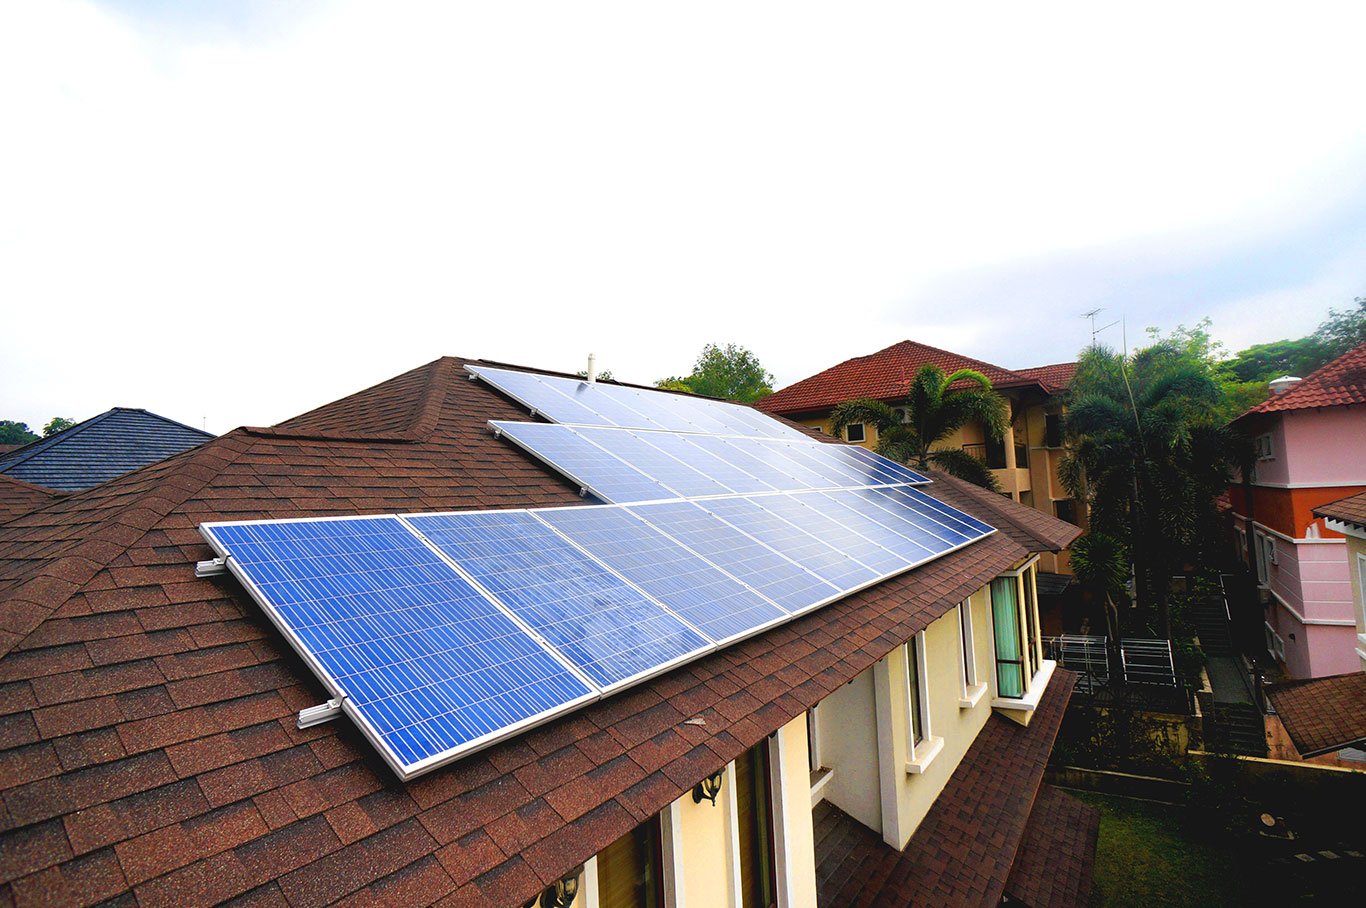 Plus Xnergy预计在第一年替2000户住家安装太阳能系统，而第二年将增加至5000户。这也响应了政府在今年稍早推出的NEM 3.0 Rakyat计划，鼓励消费者和家庭用户采用太阳能解决方案。